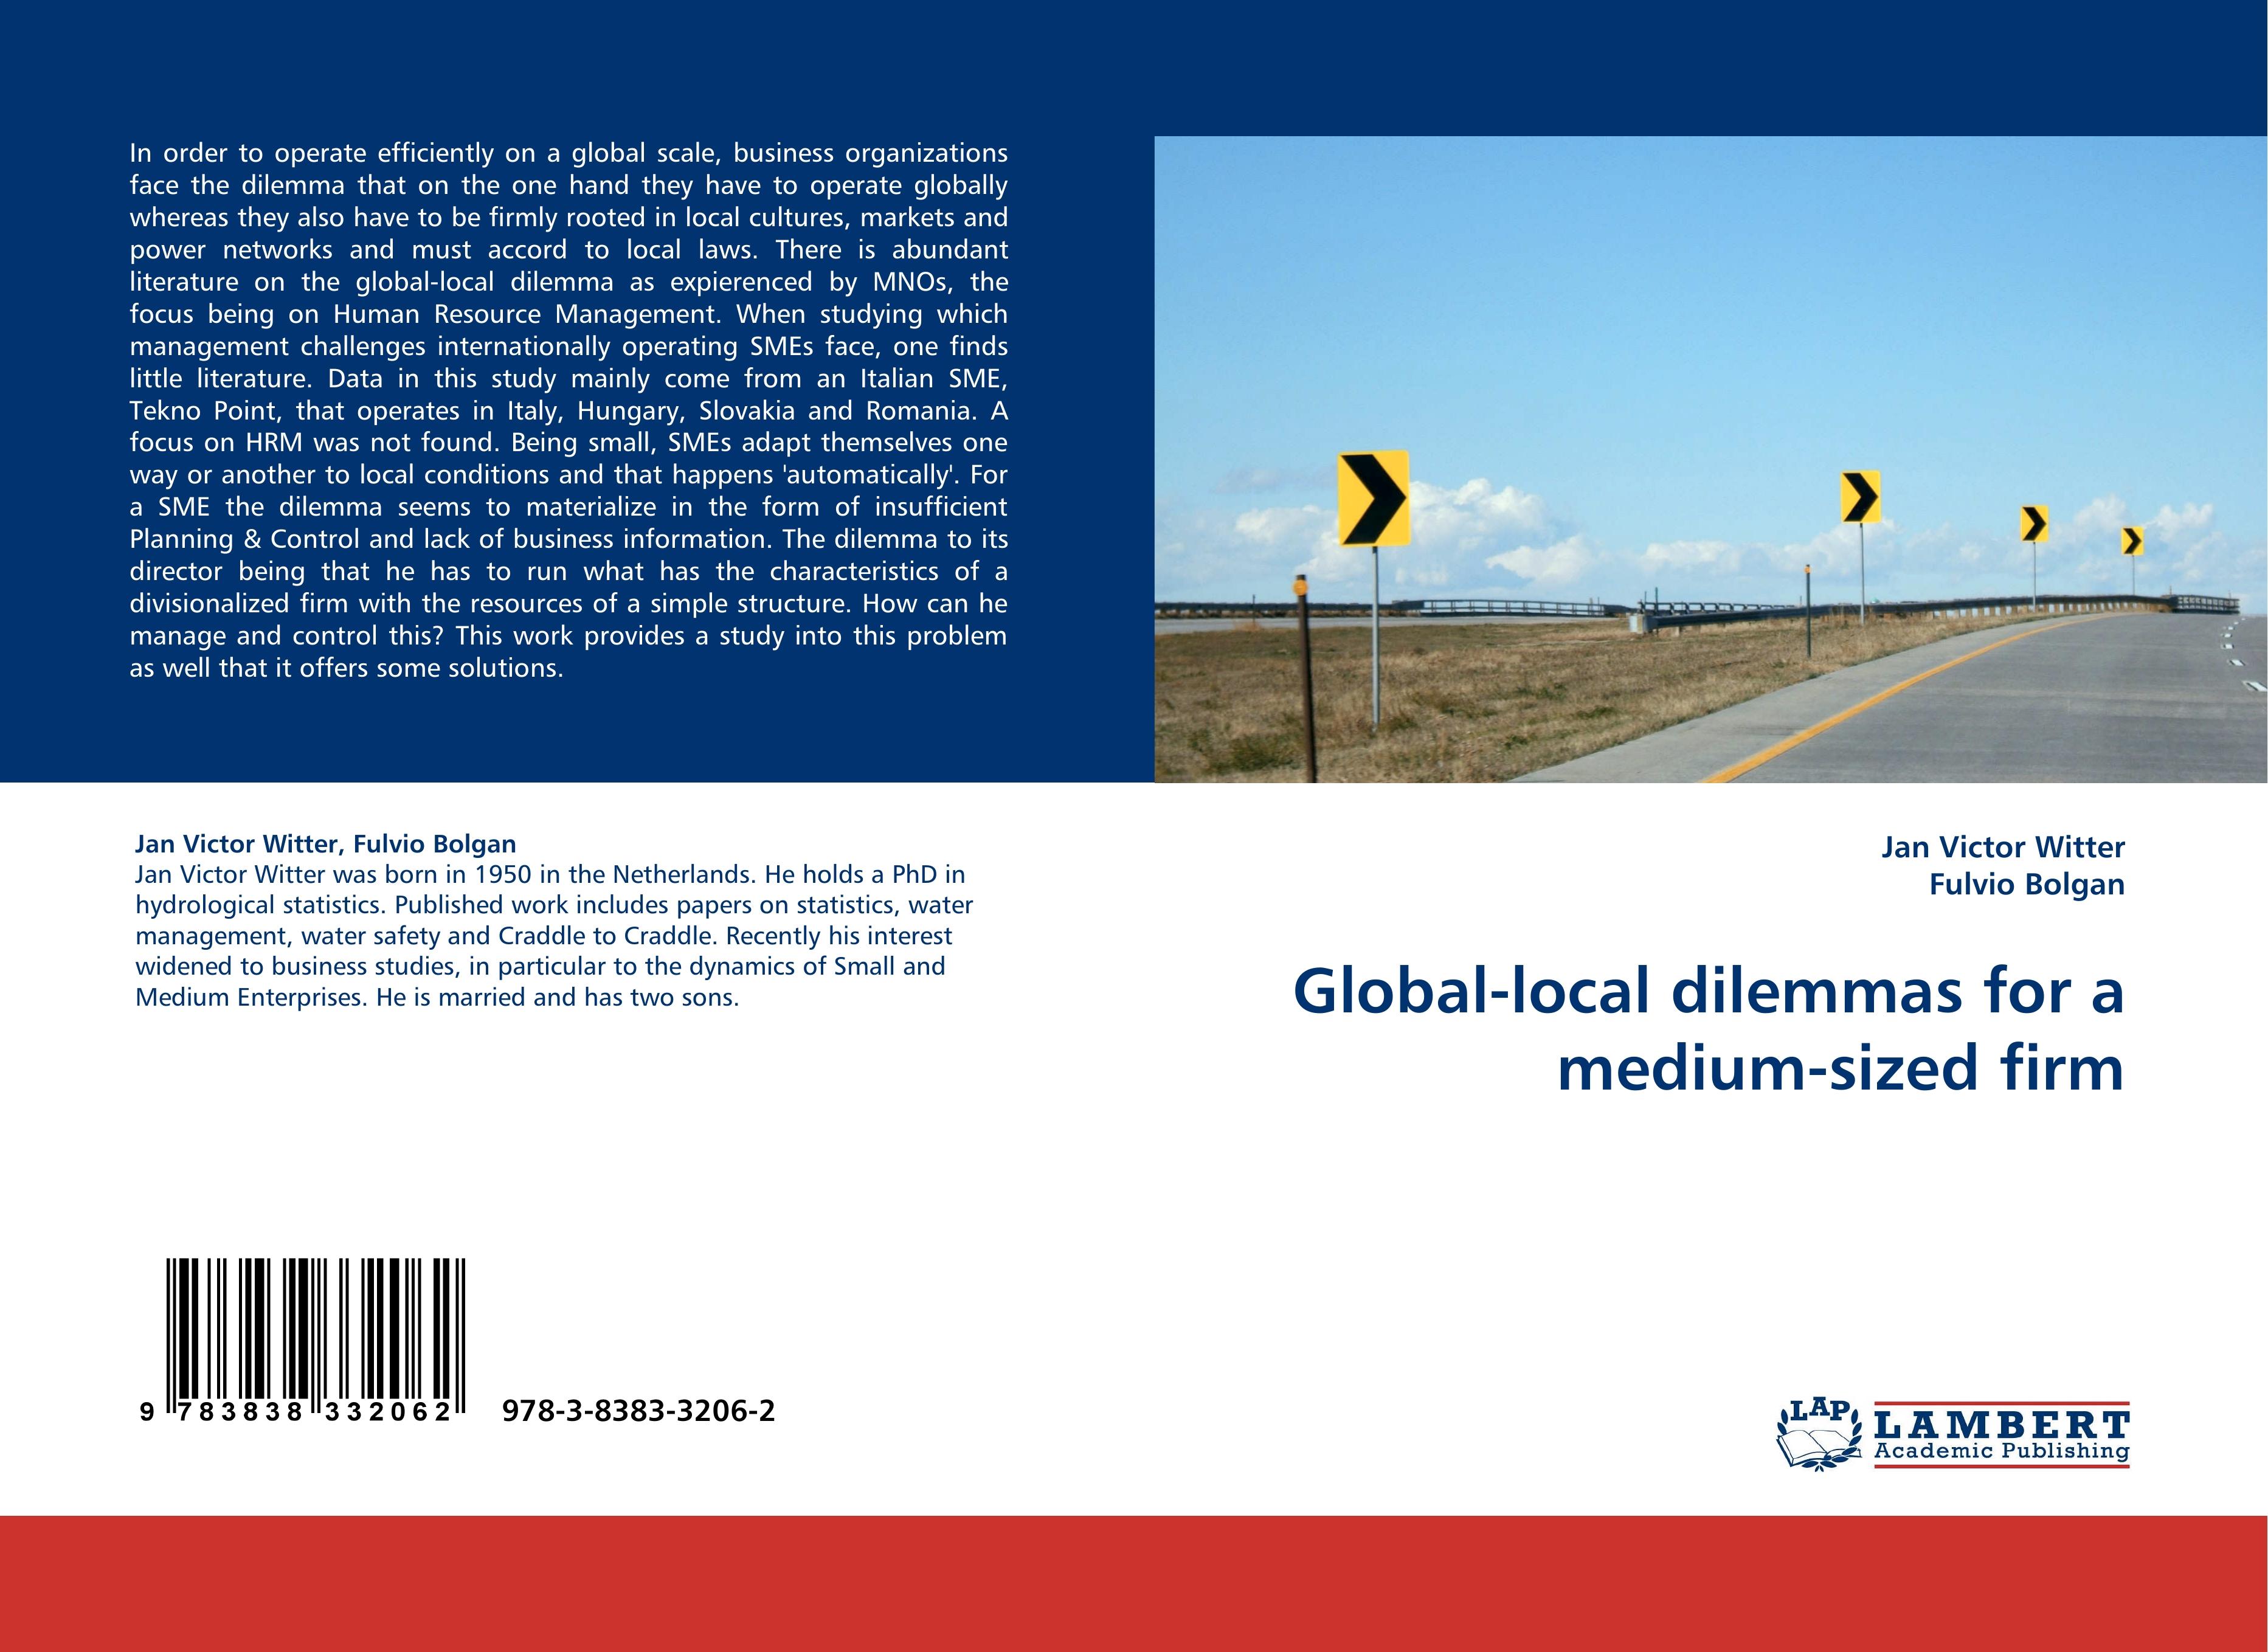 Global-local dilemmas for a medium-sized firm - Jan Victor Witter Fulvio Bolgan